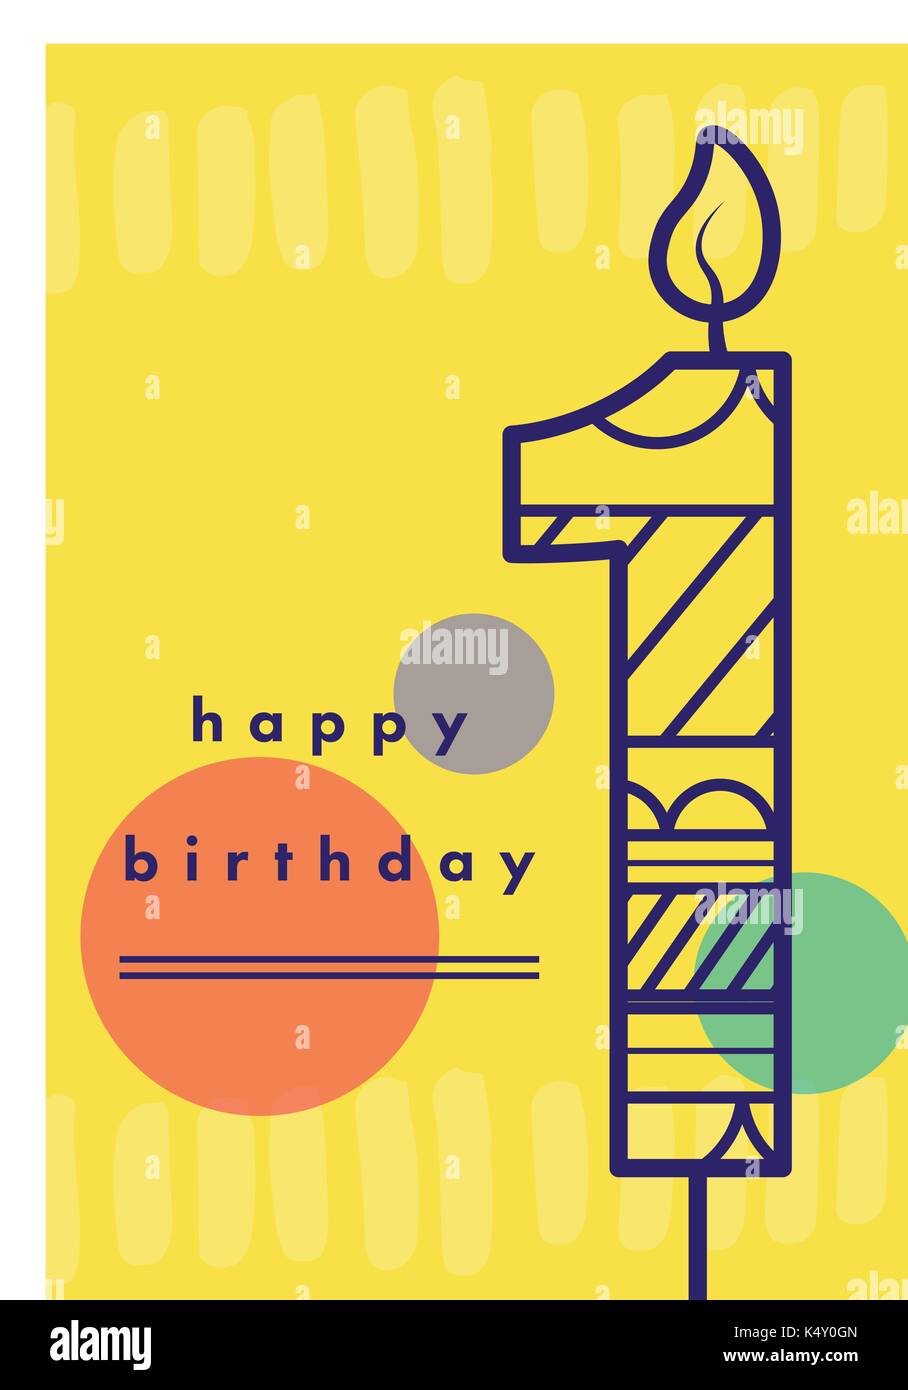 Happy birthday 1 year greeting card Stock Vector